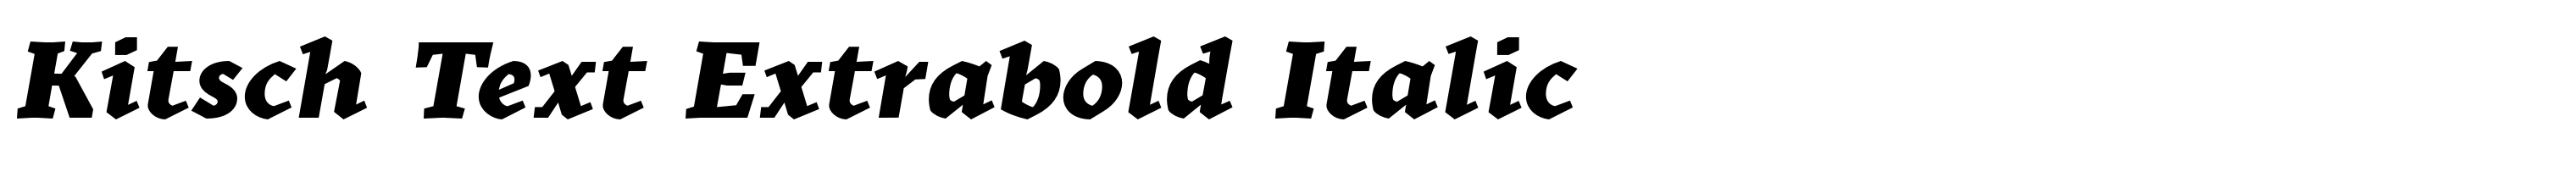 Kitsch Text Extrabold Italic